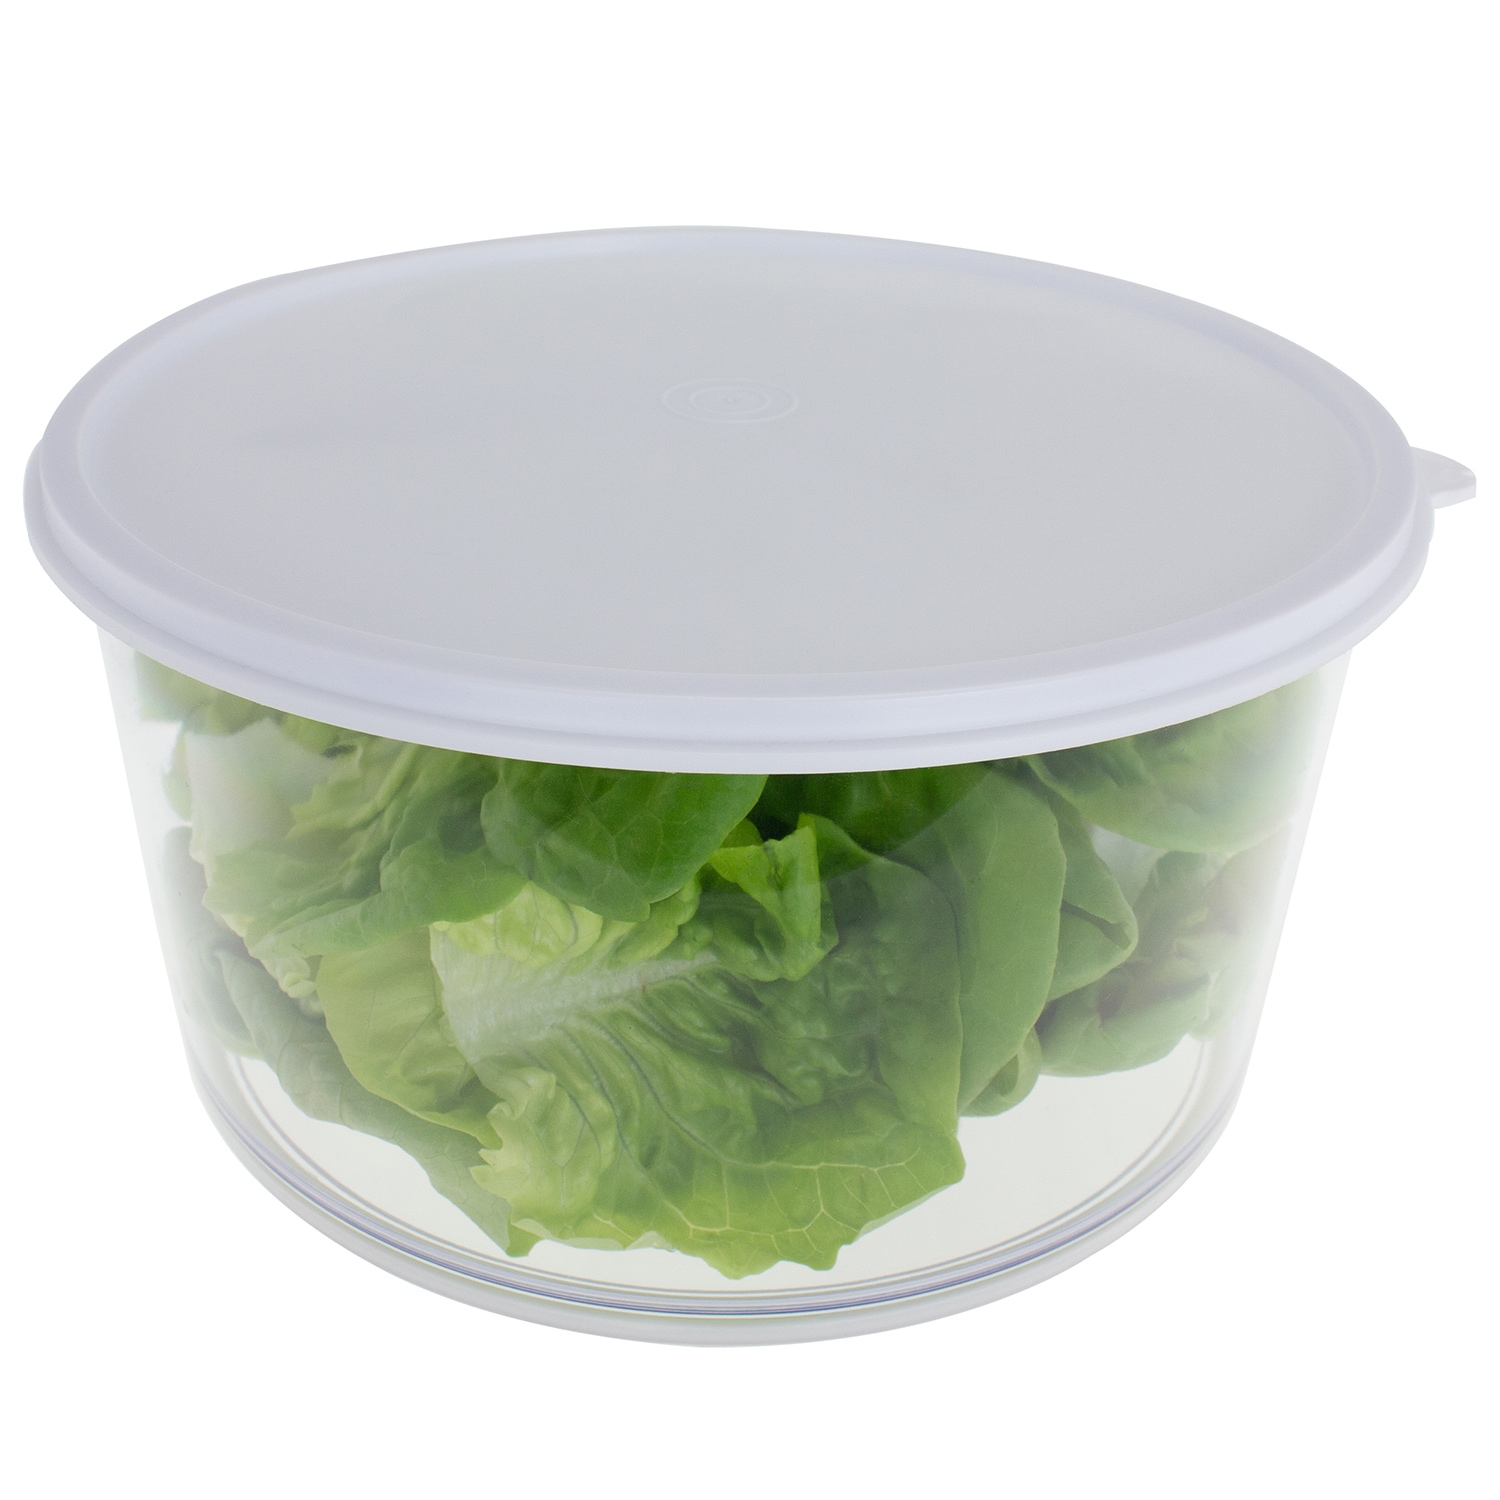 https://ak1.ostkcdn.com/images/products/10480210/Freshware-Salad-Spinner-with-Storage-Lid-25a5b5af-9855-41d6-b15d-2b2c4f2163b1.jpg